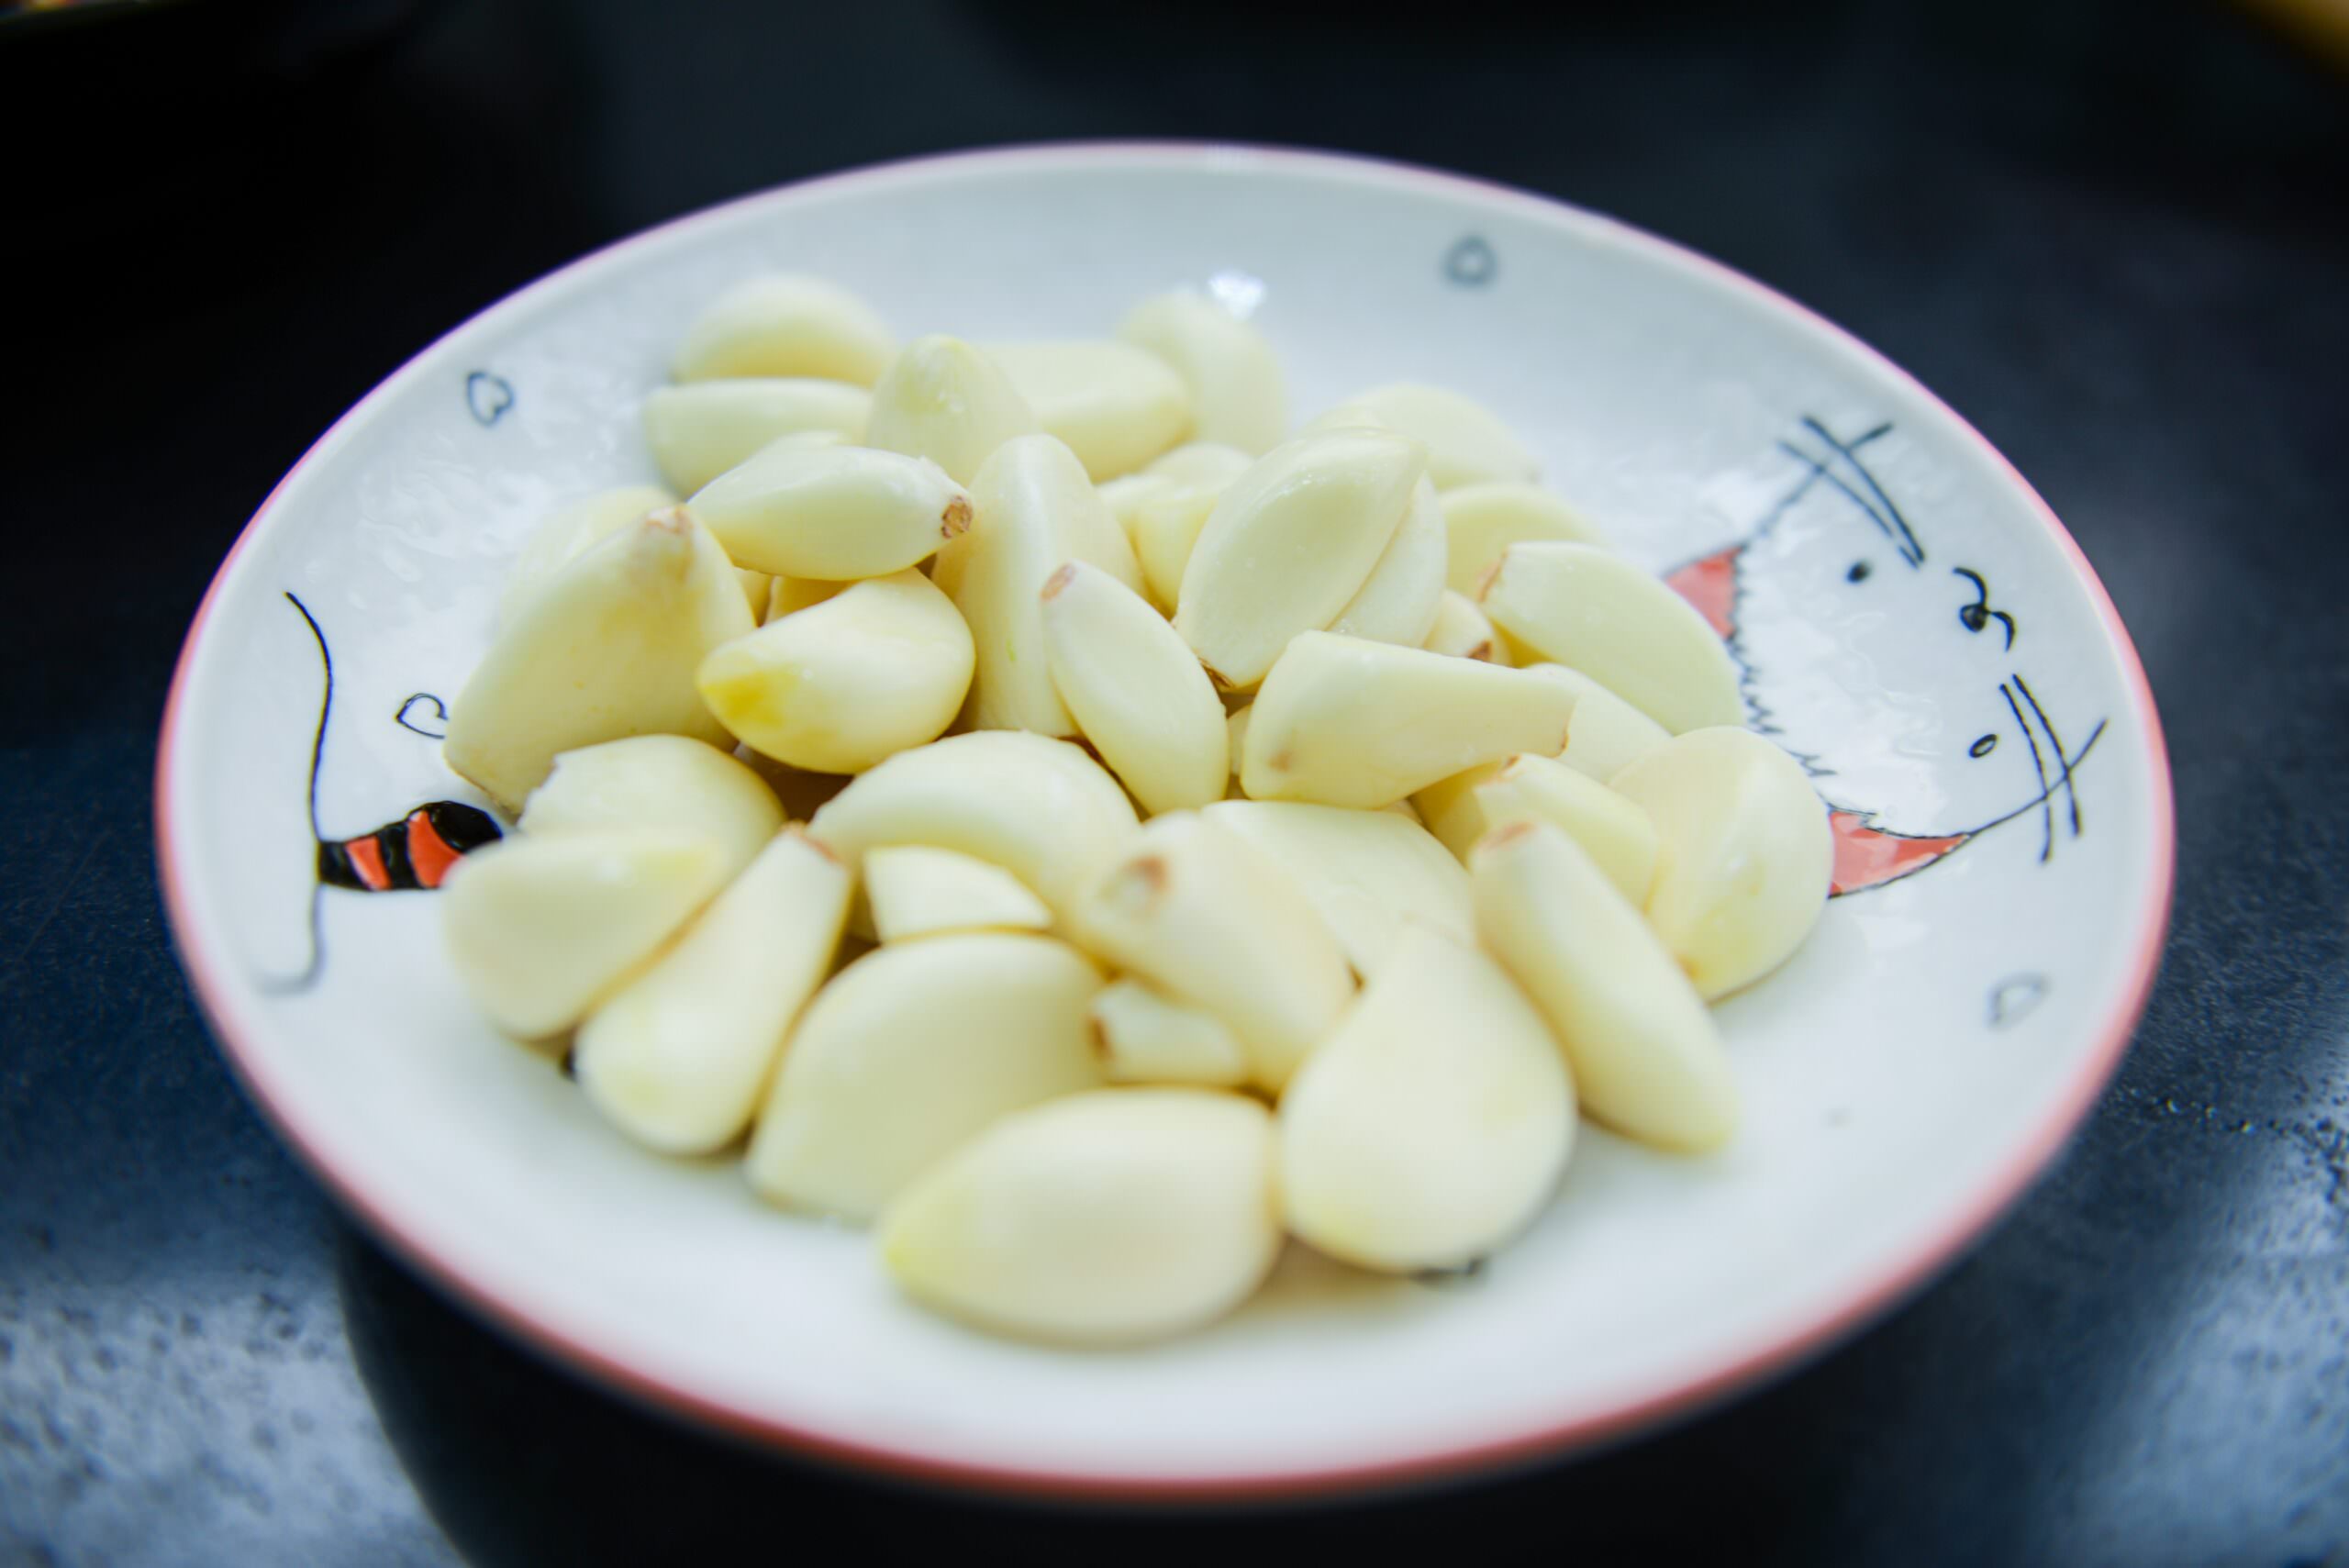 a plate of garlic